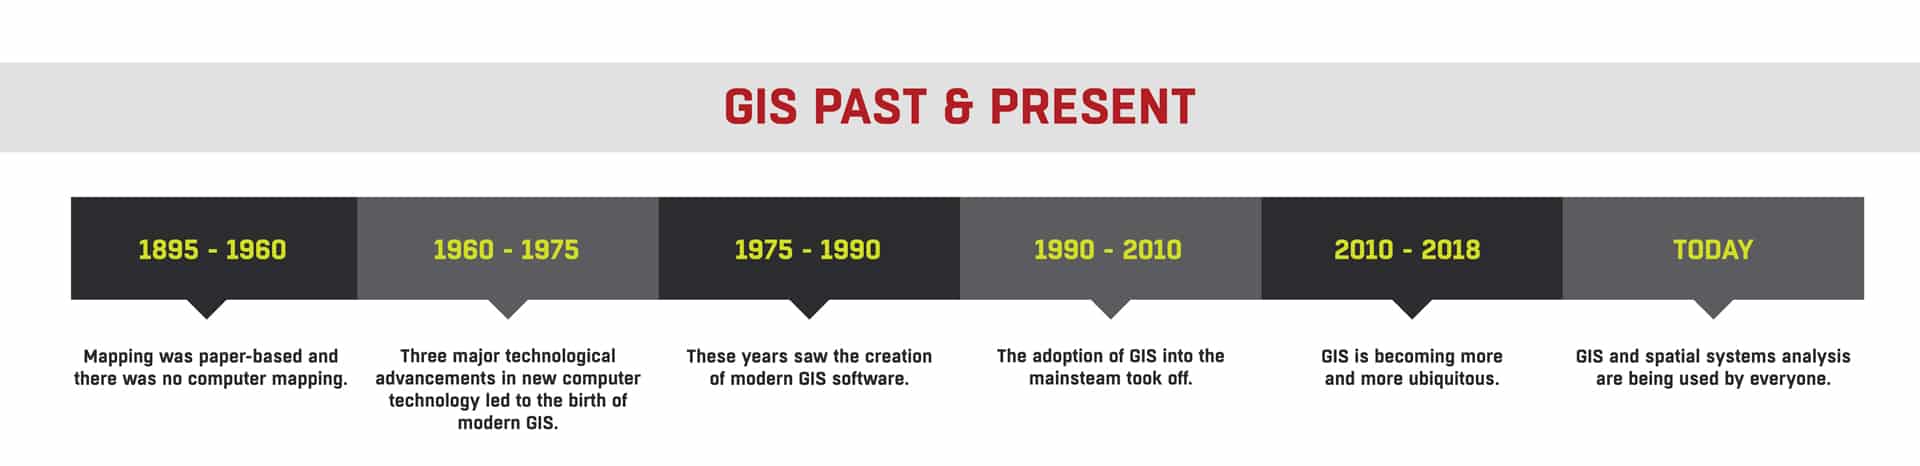 GIS Past & Present Timeline